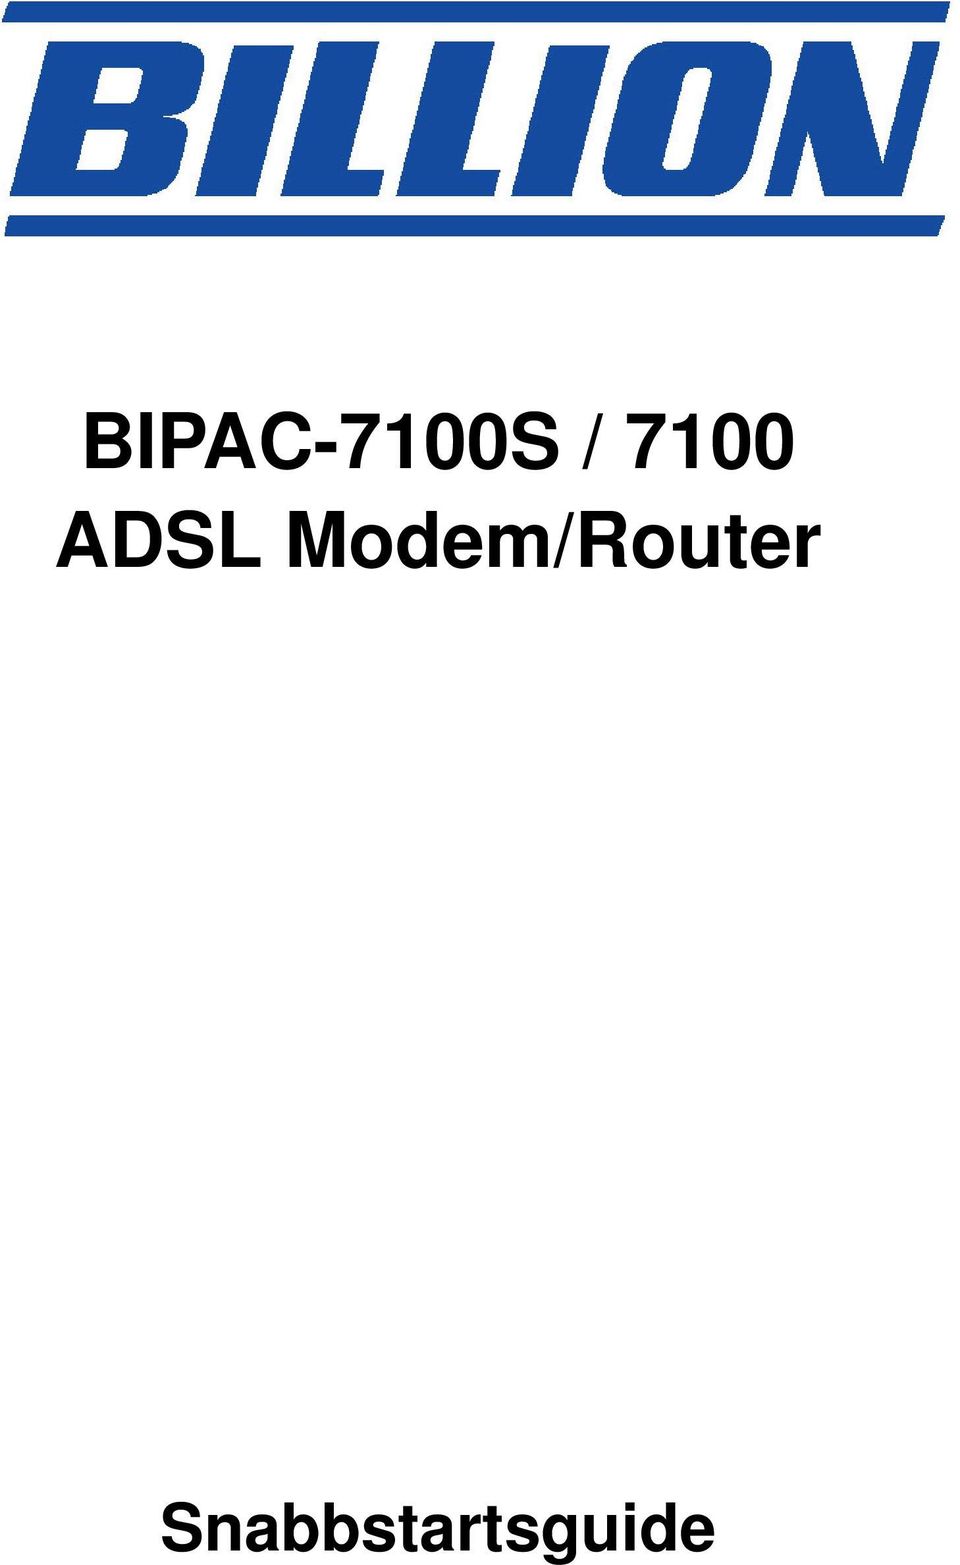 Modem/Router